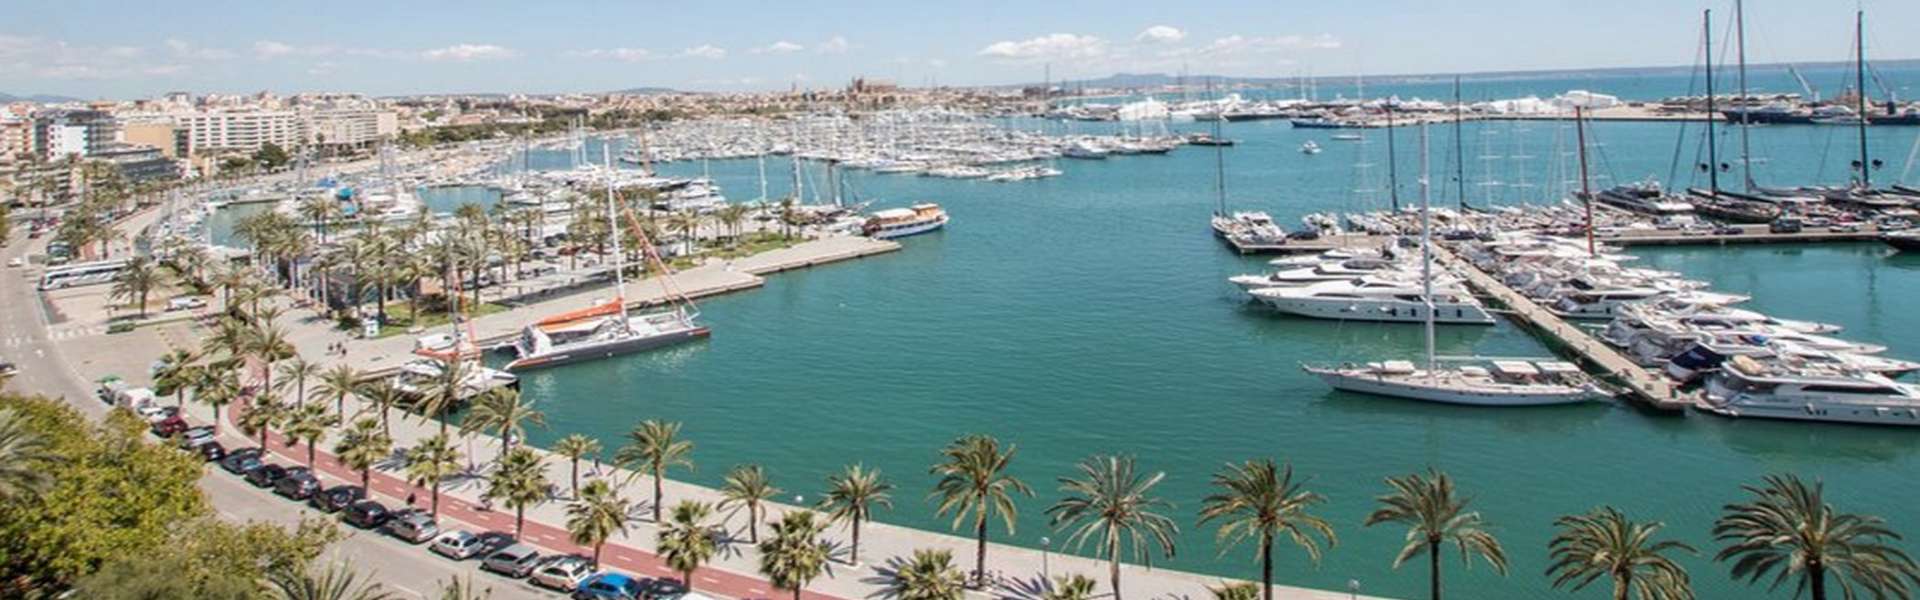 Palma/Paseo Marítimo - Luxuriöses Apartment mit modernem Design und spektakulärem Ausblick